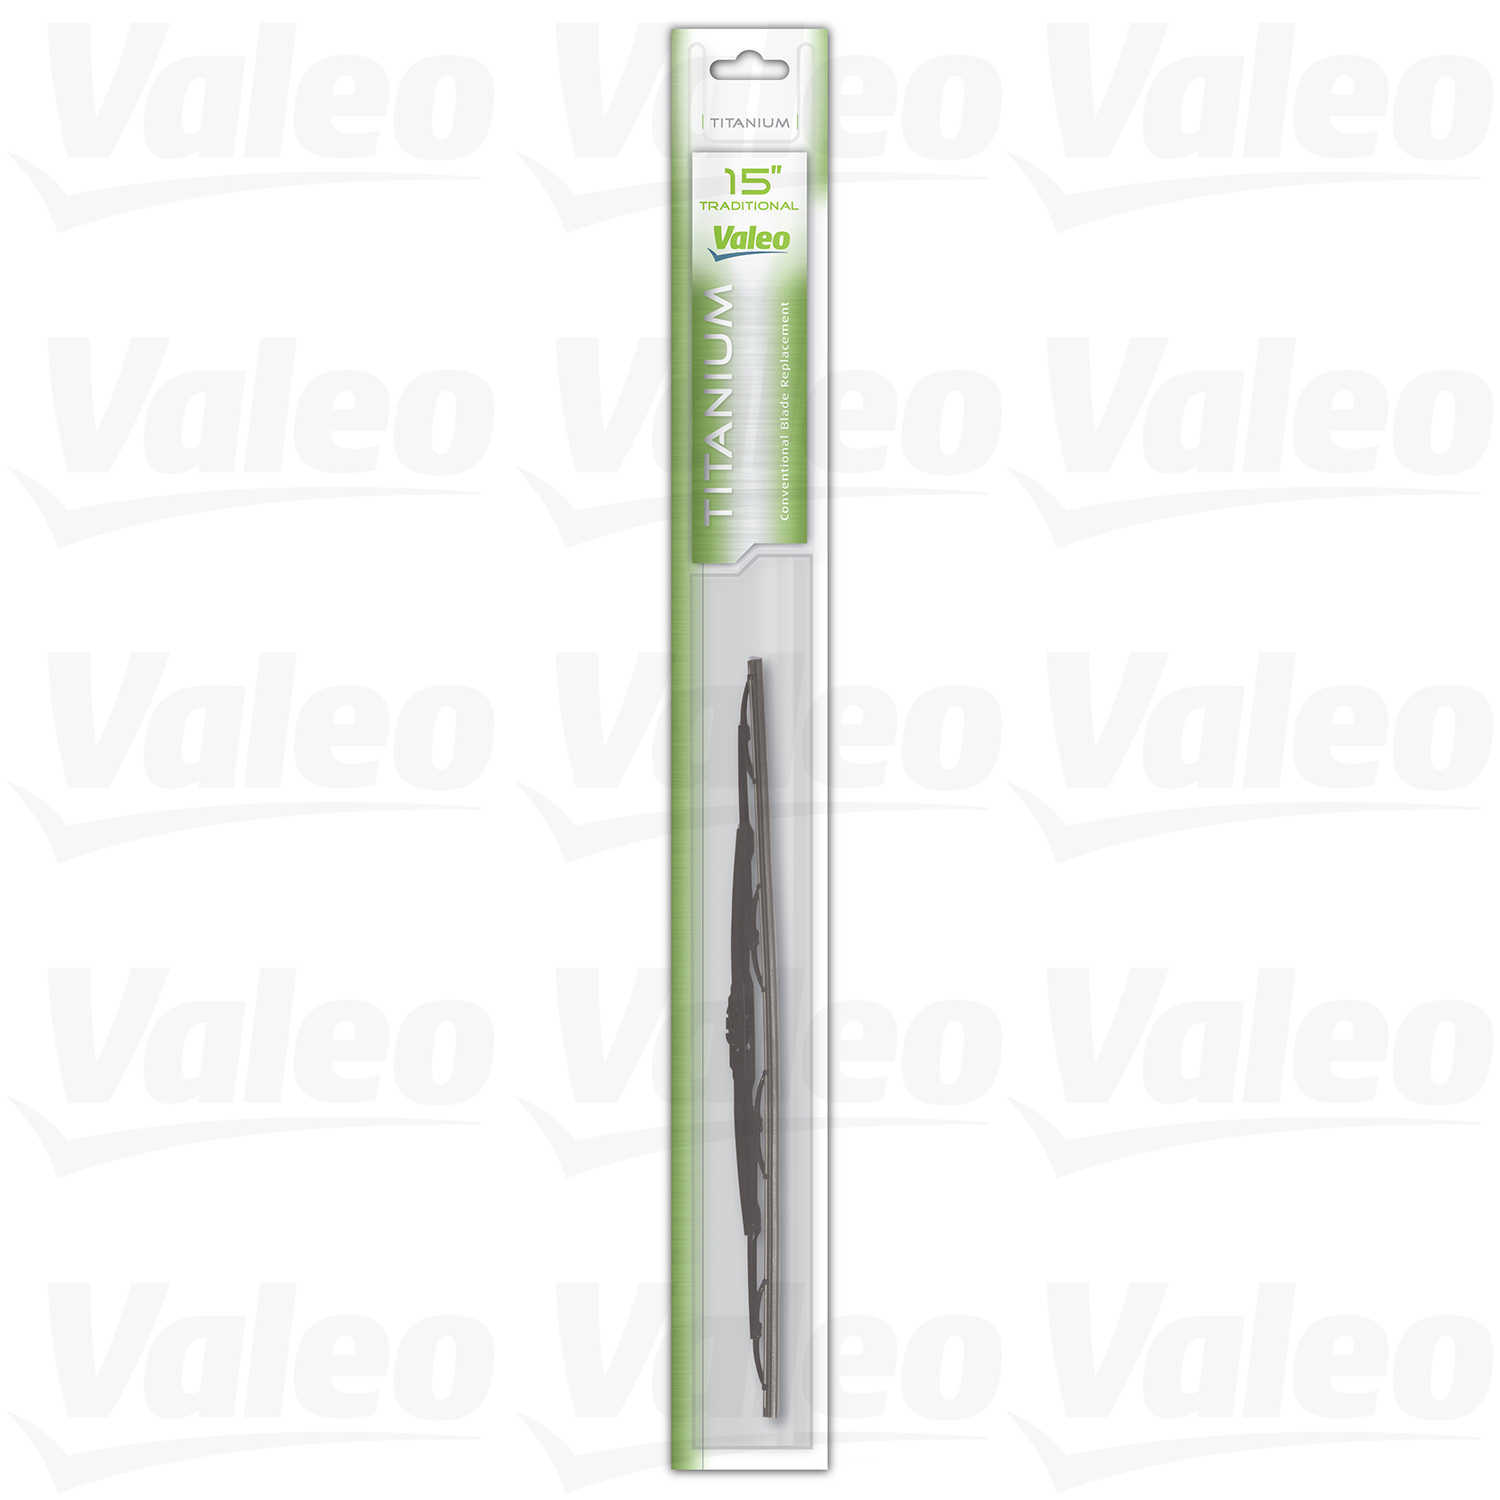 VALEO - Traditional Titanium Wiper Blade - VEO 604466